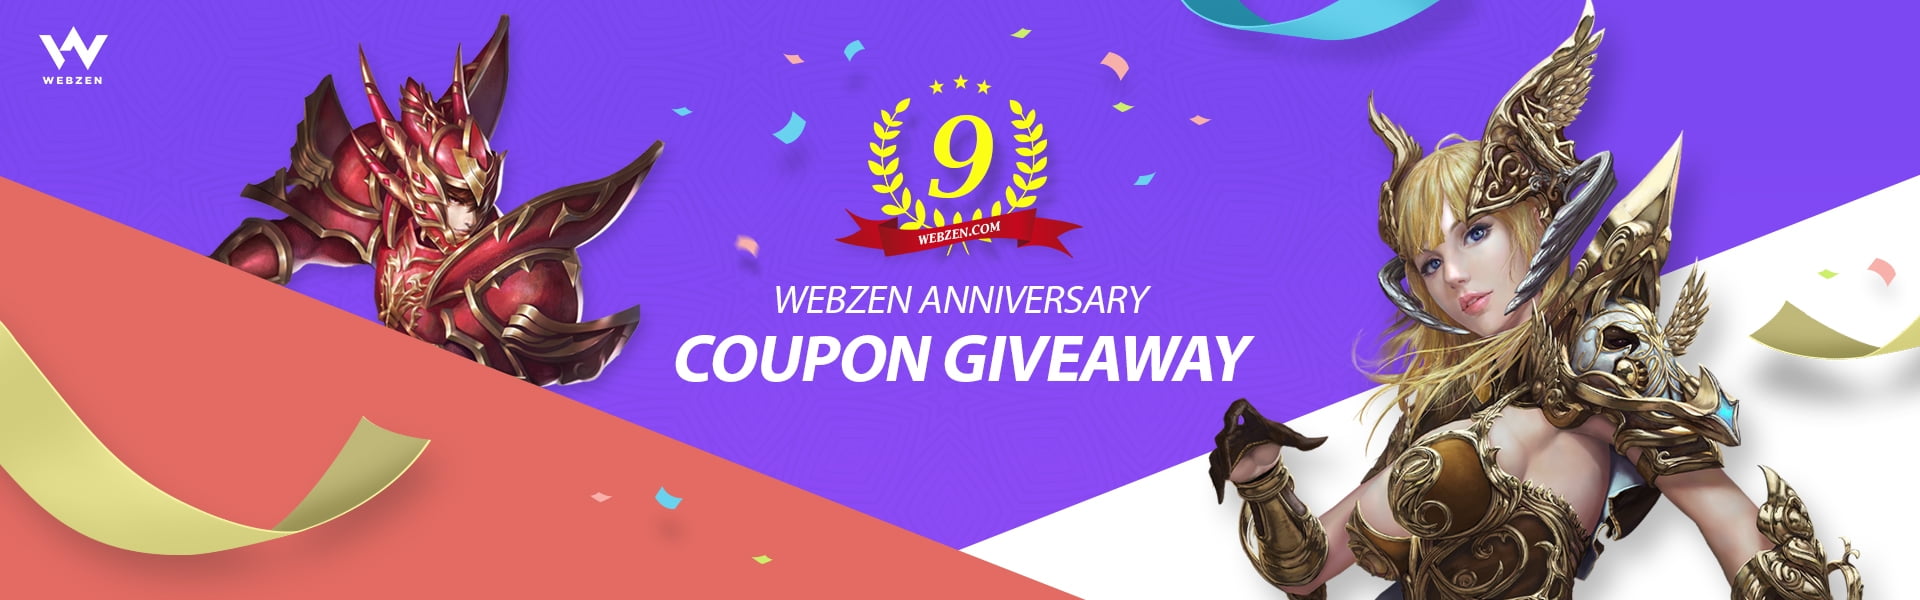 Webzen.com's 9th Anniversary Coupon Giveaway 14